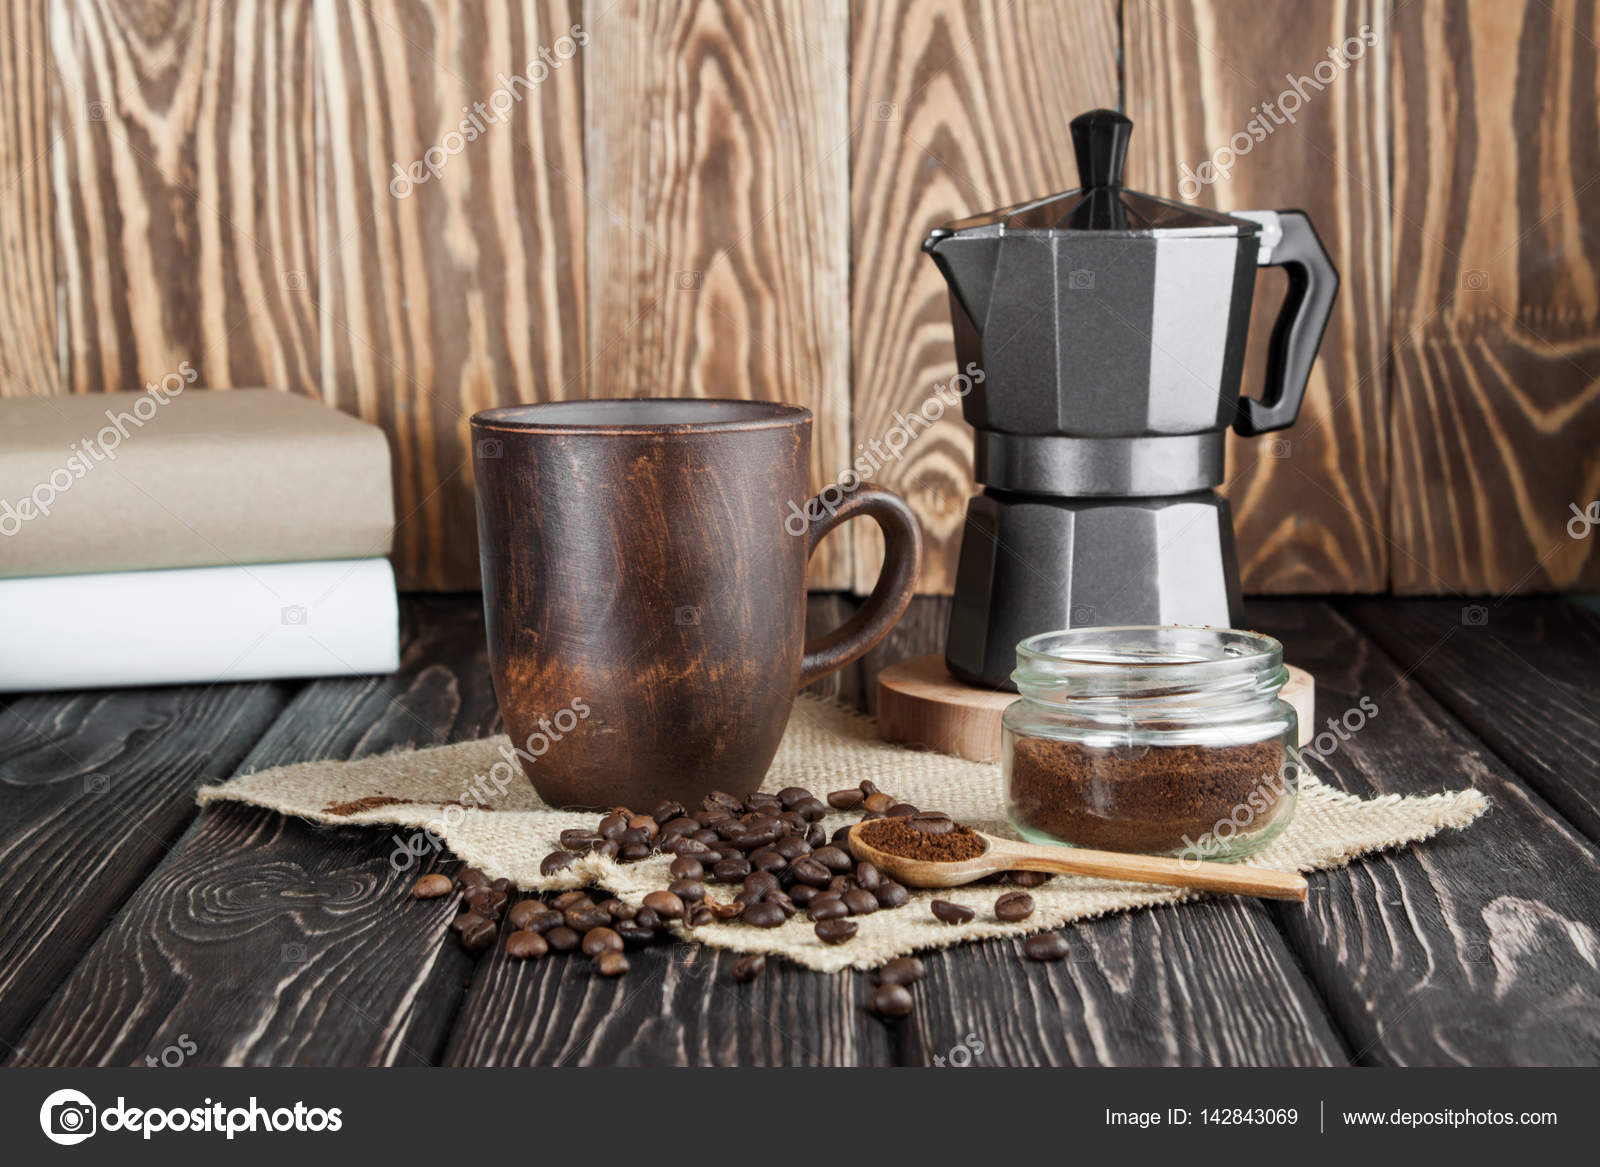 https://st3.depositphotos.com/4189501/14284/i/1600/depositphotos_142843069-stock-photo-coffee-maker-on-wood-desk.jpg